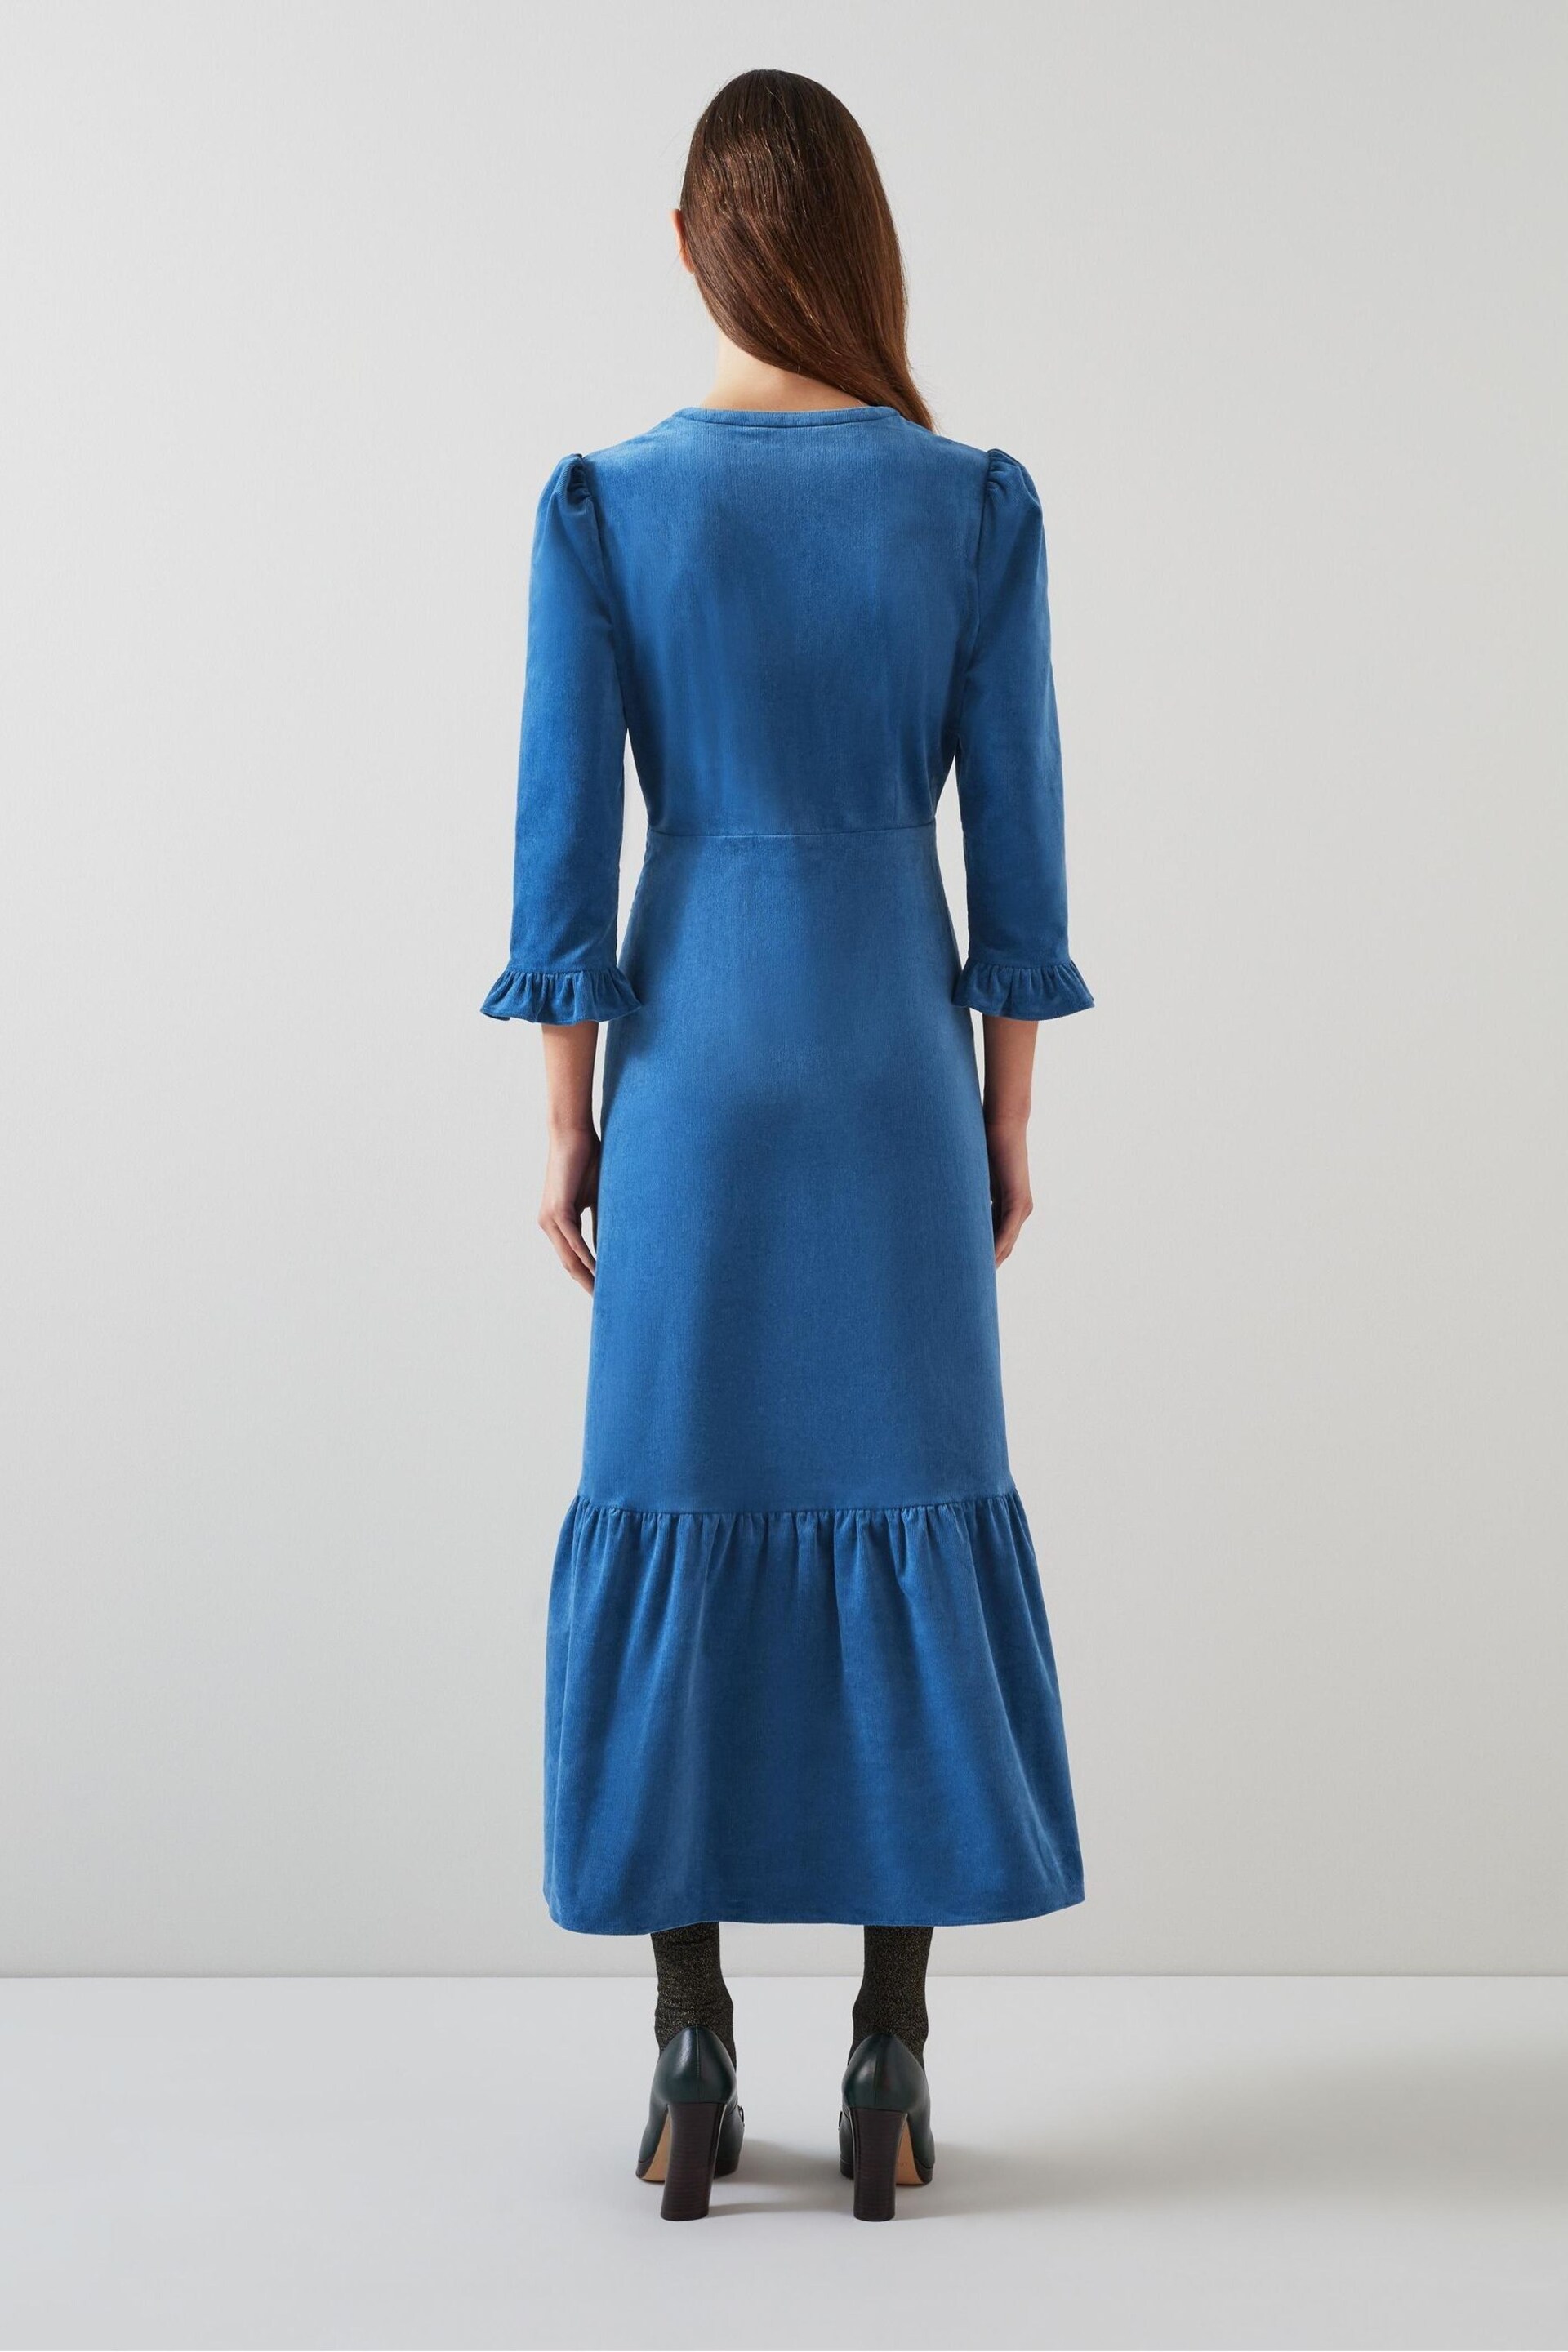 LK Bennett Deborah Cotton Cord Dress - Image 2 of 3